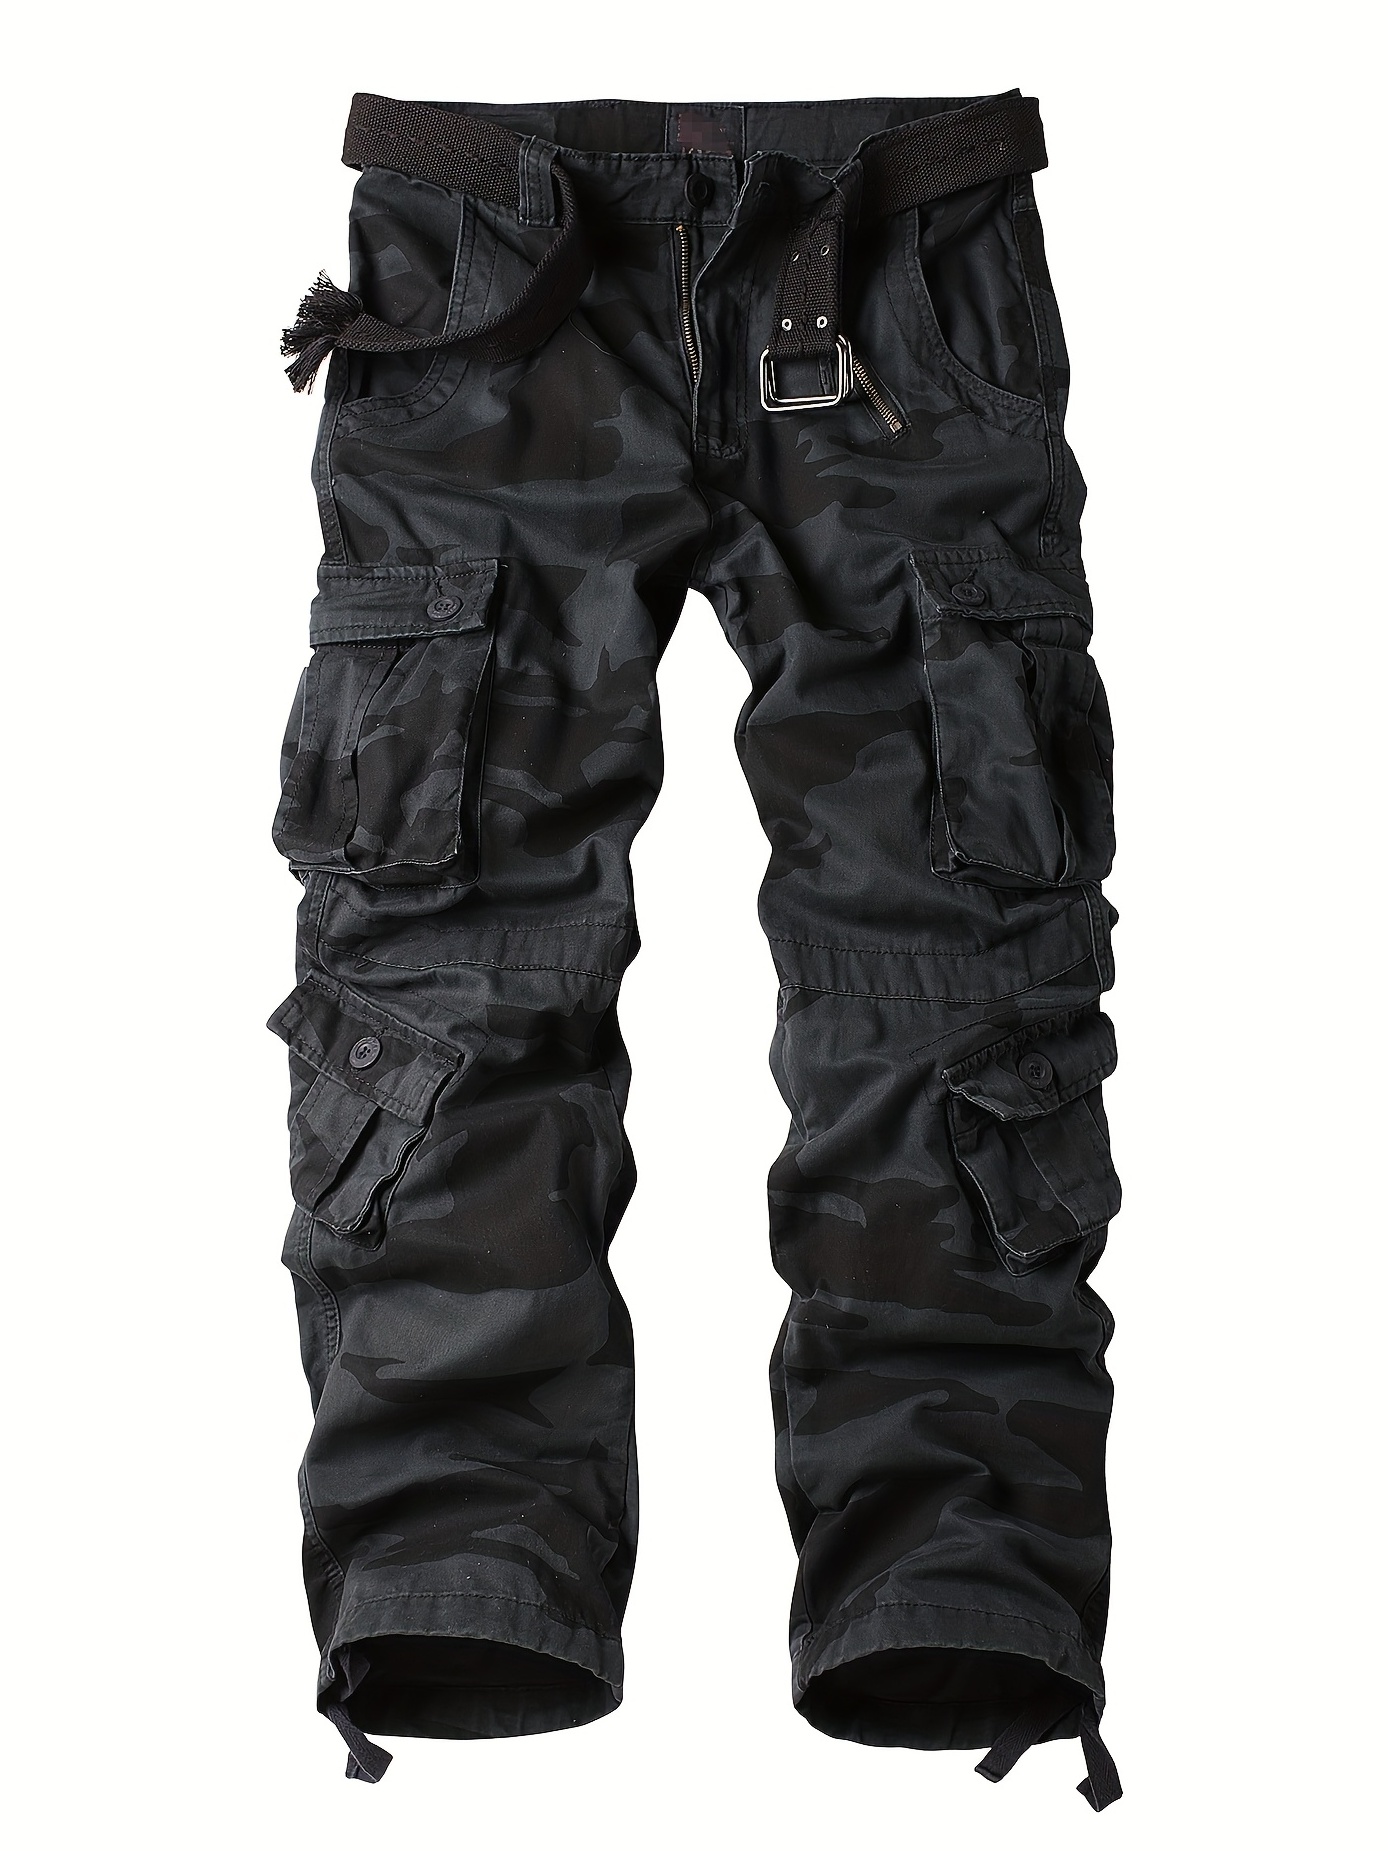 Men's Fleece Lined Cargo Pants Camo Hiking Tactical Ripstop Pants